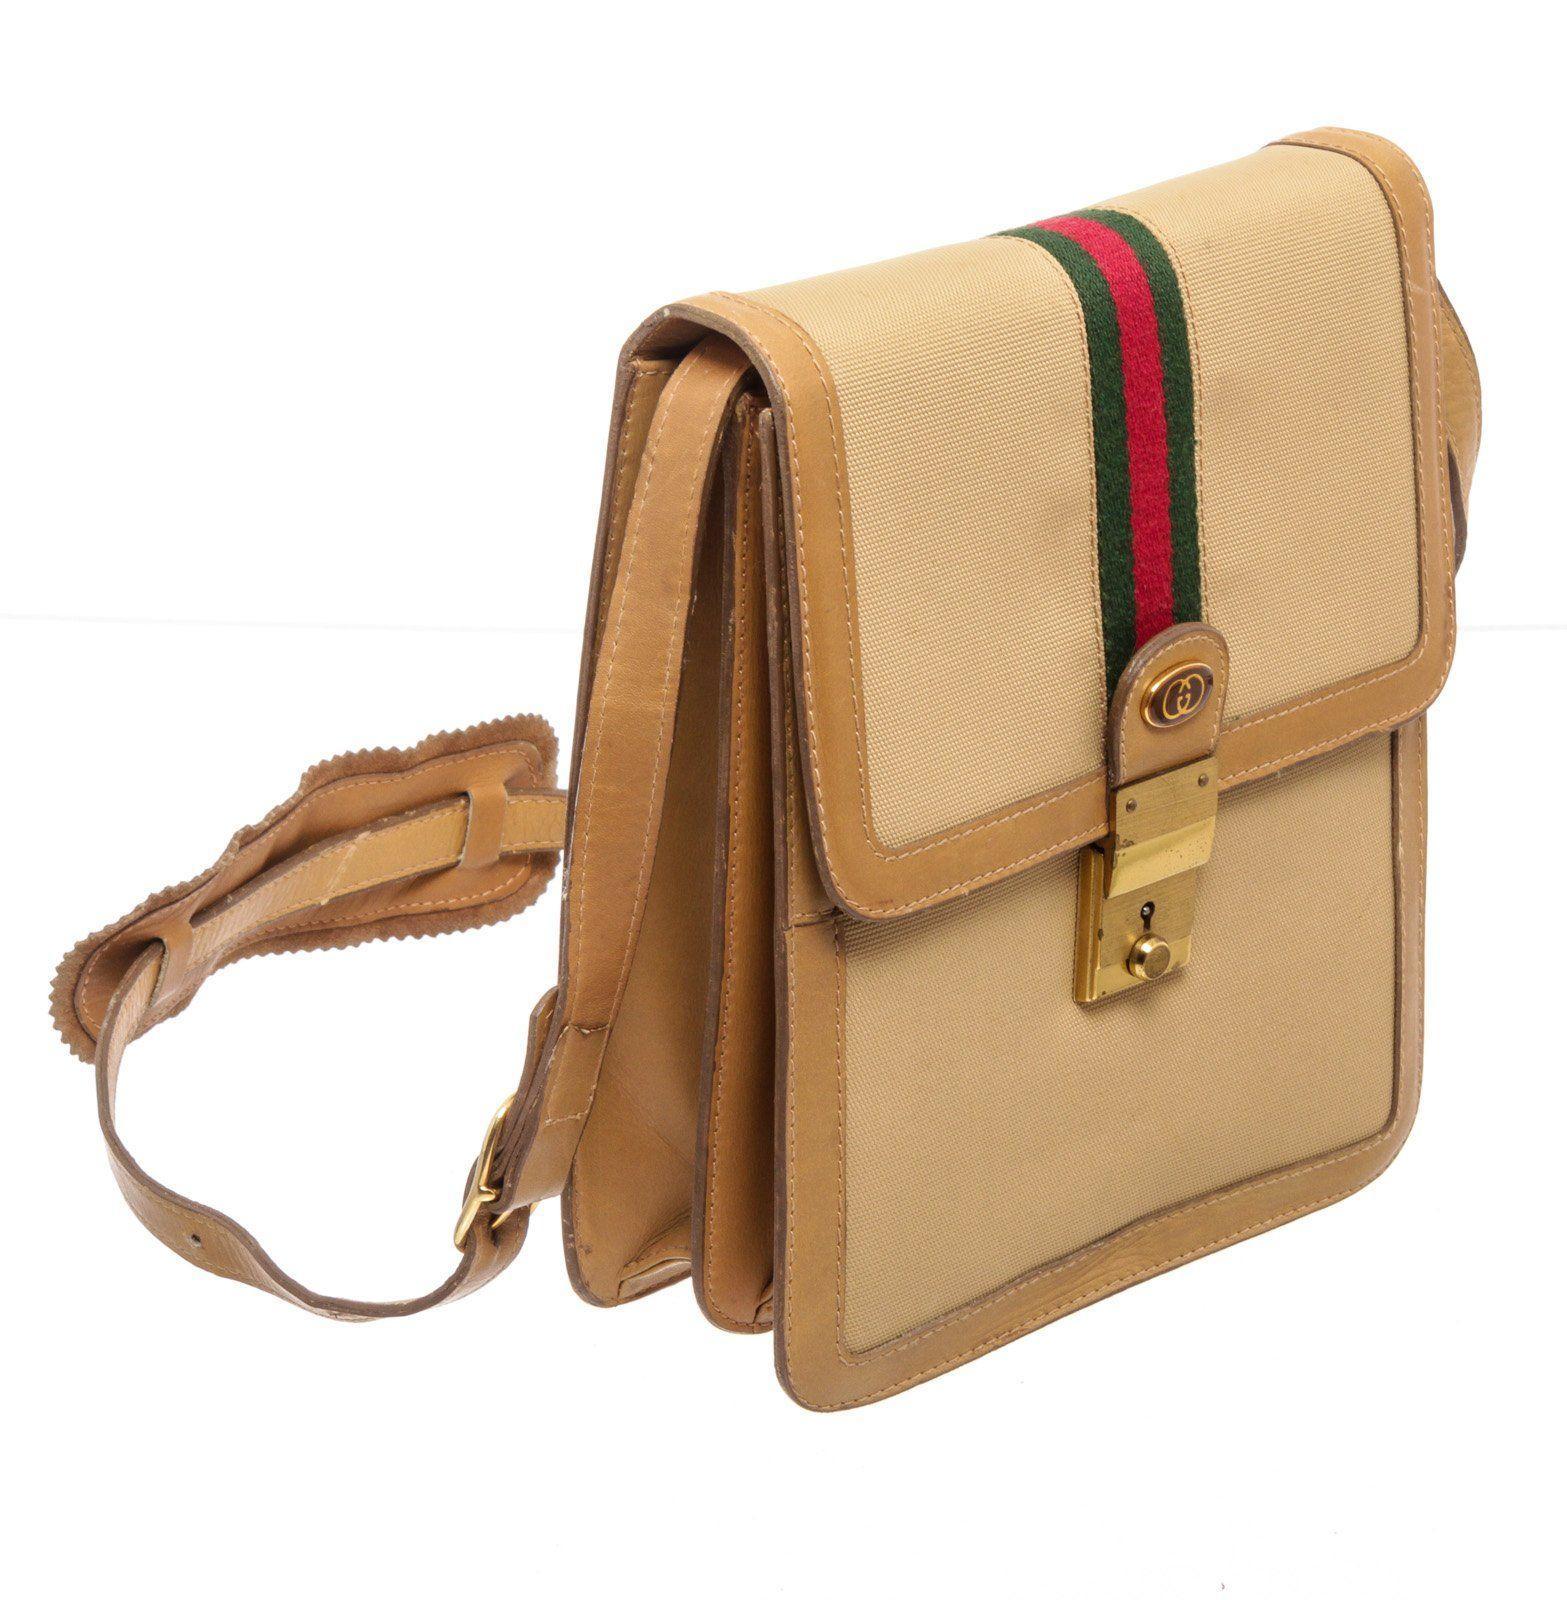 Gucci Beige Canvas Sherry Shoulder Bag with gold-tone hardware, beige leather trim, leather shoulder strap, and flap closure.


27308MSC